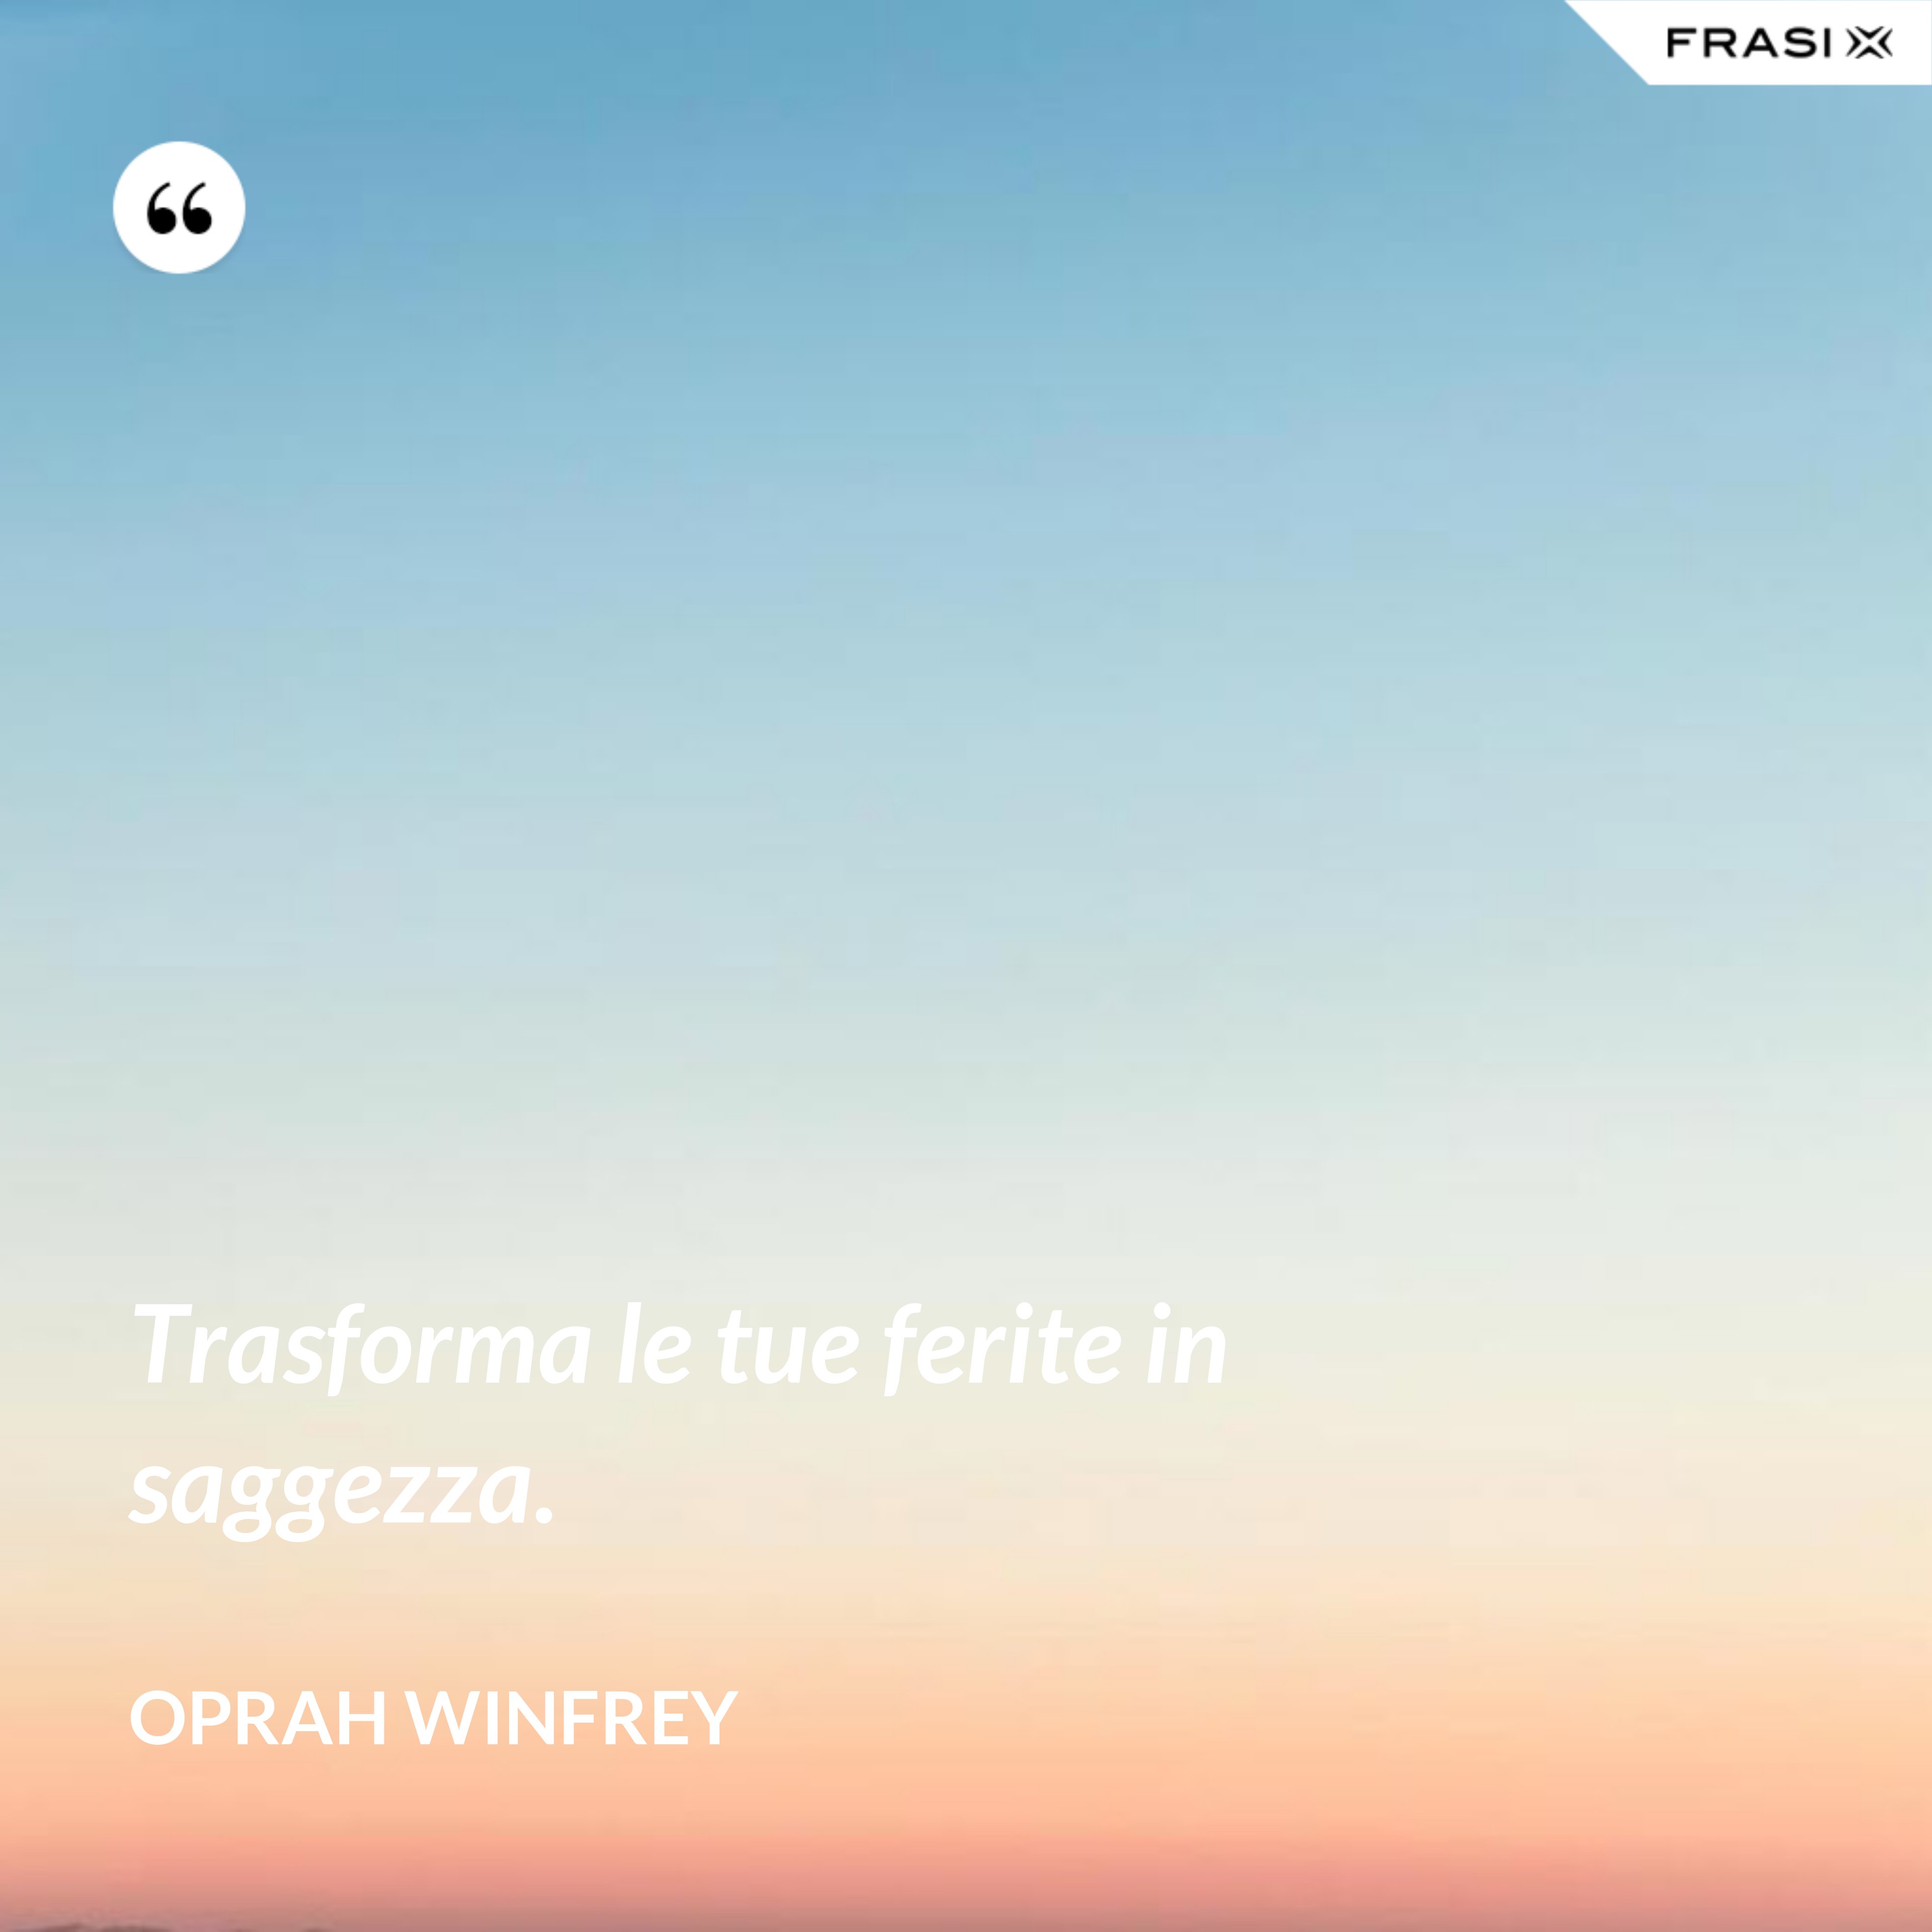 Trasforma le tue ferite in saggezza. - Oprah Winfrey